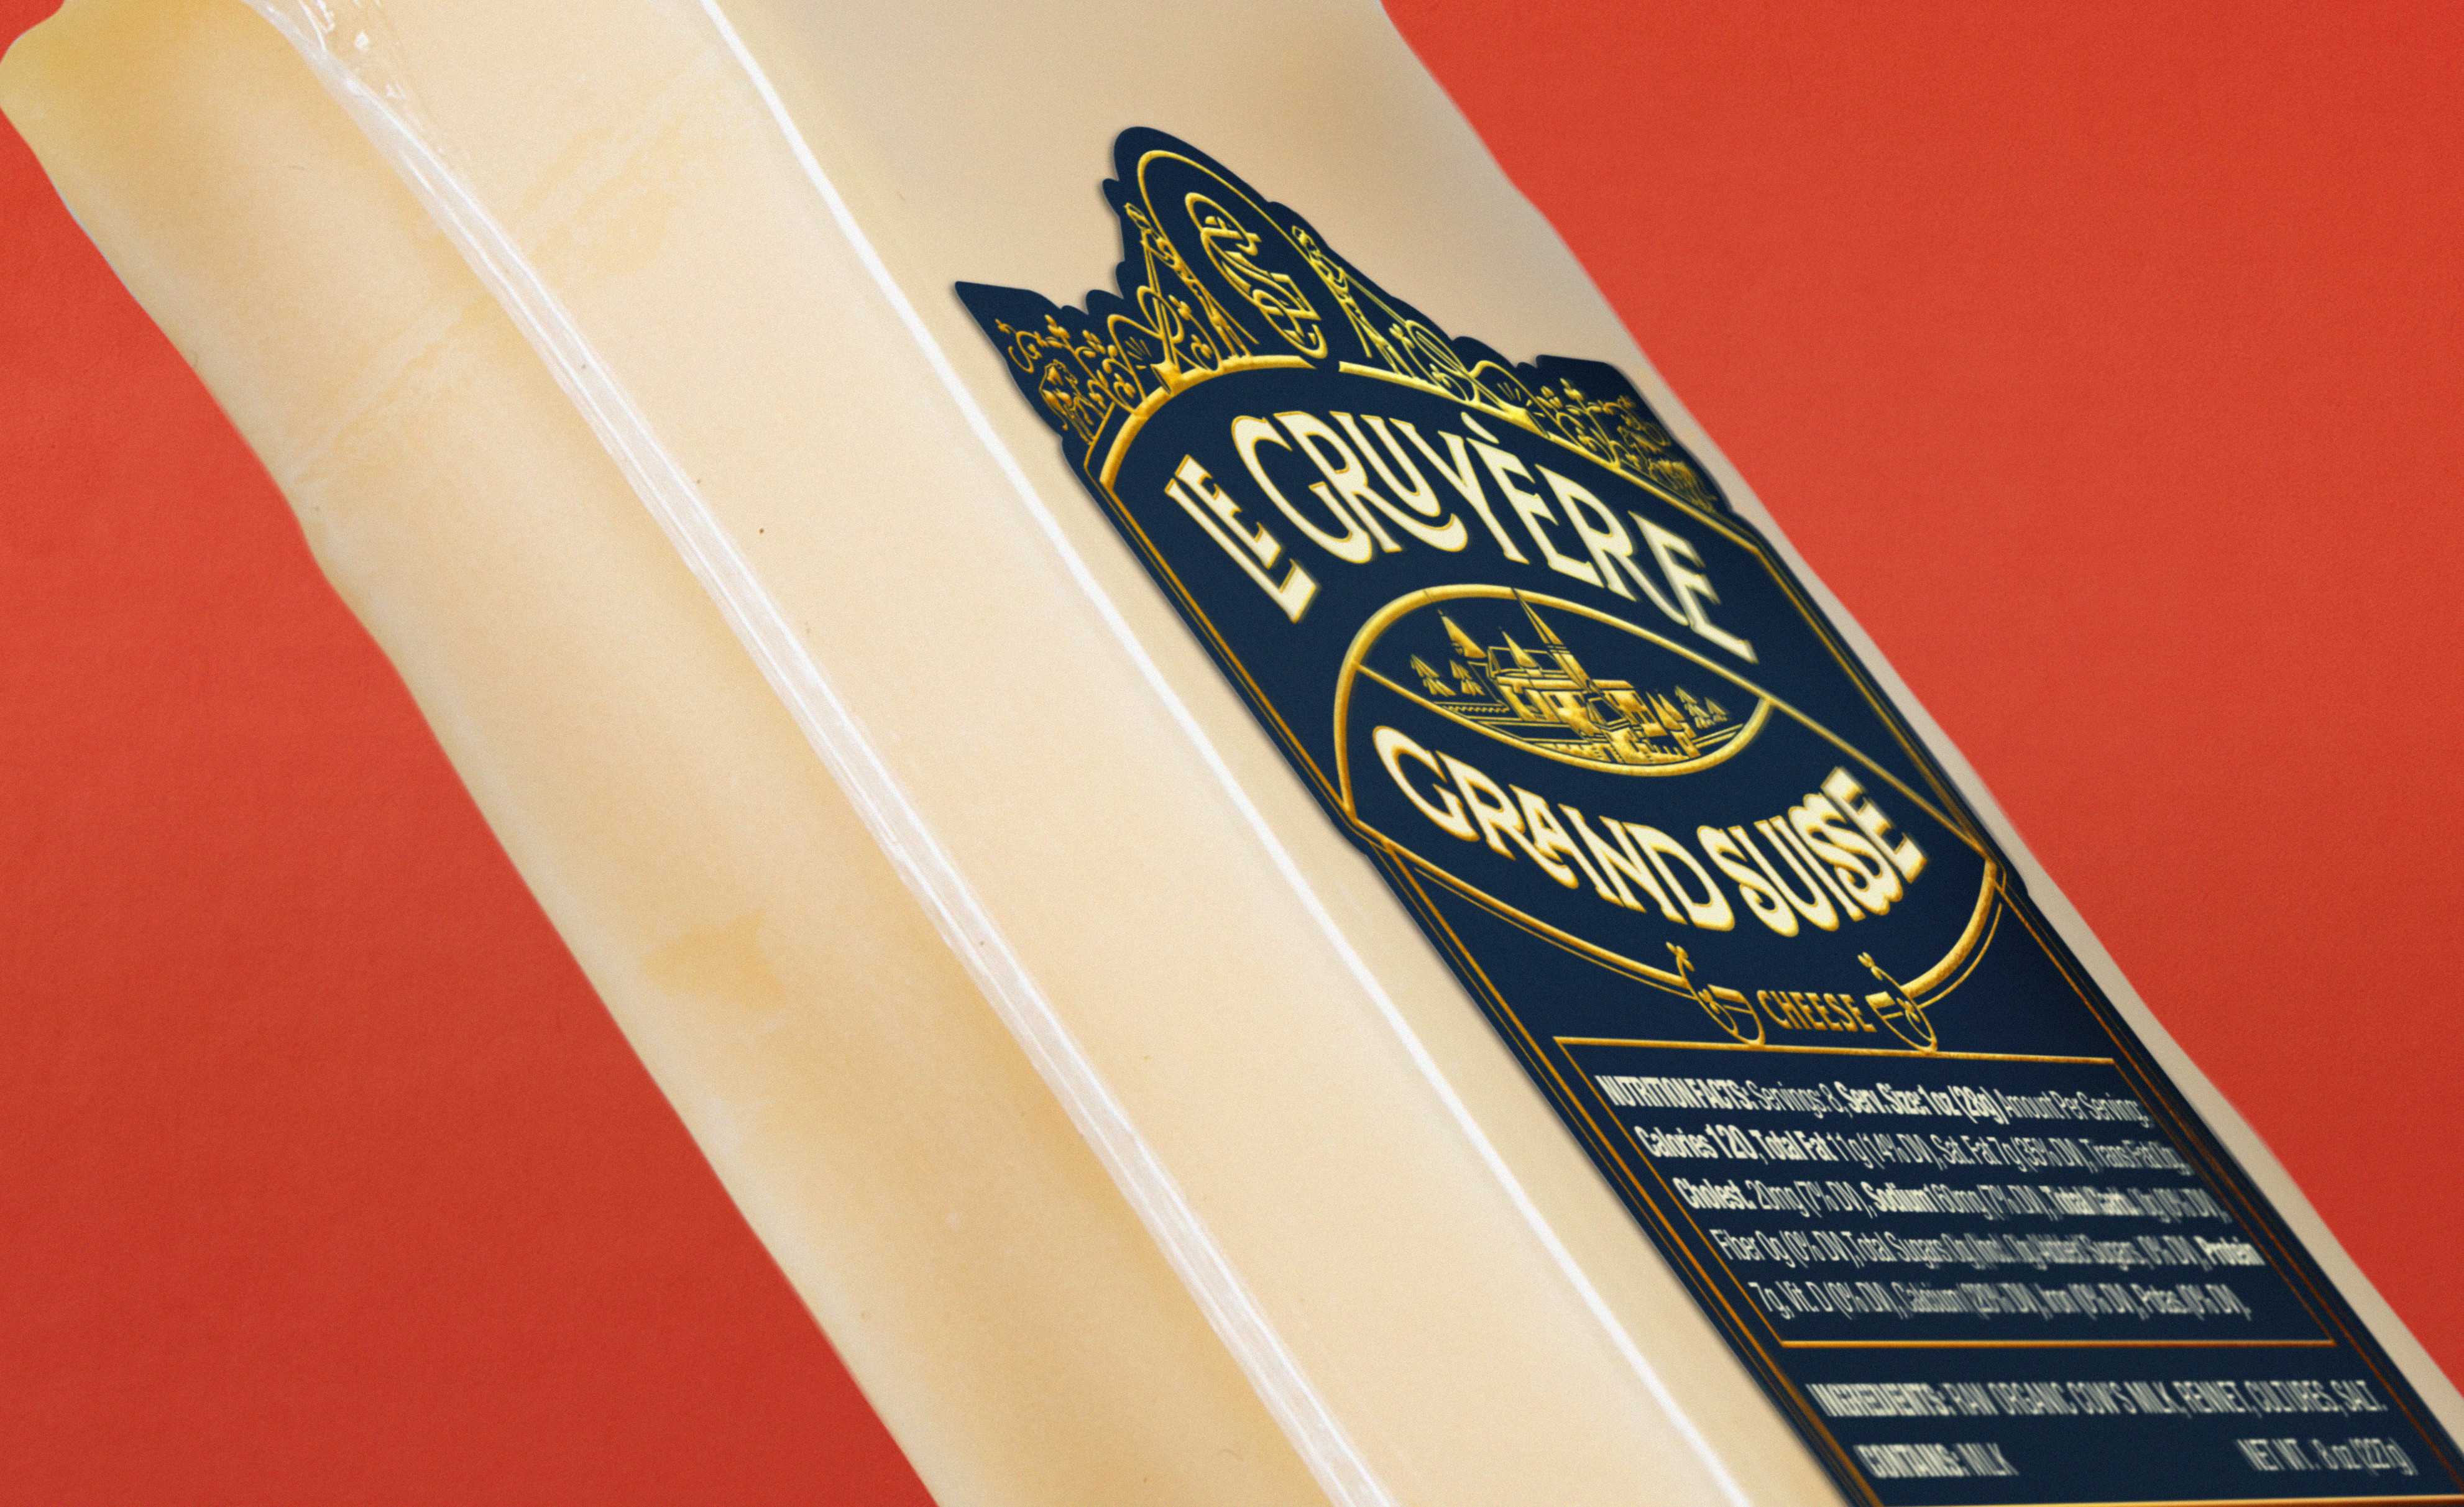 label-cheese-gruyere-preview-grand-suisse-close-zeki-michael-design-branding-studio-packaging-red copy copy copy